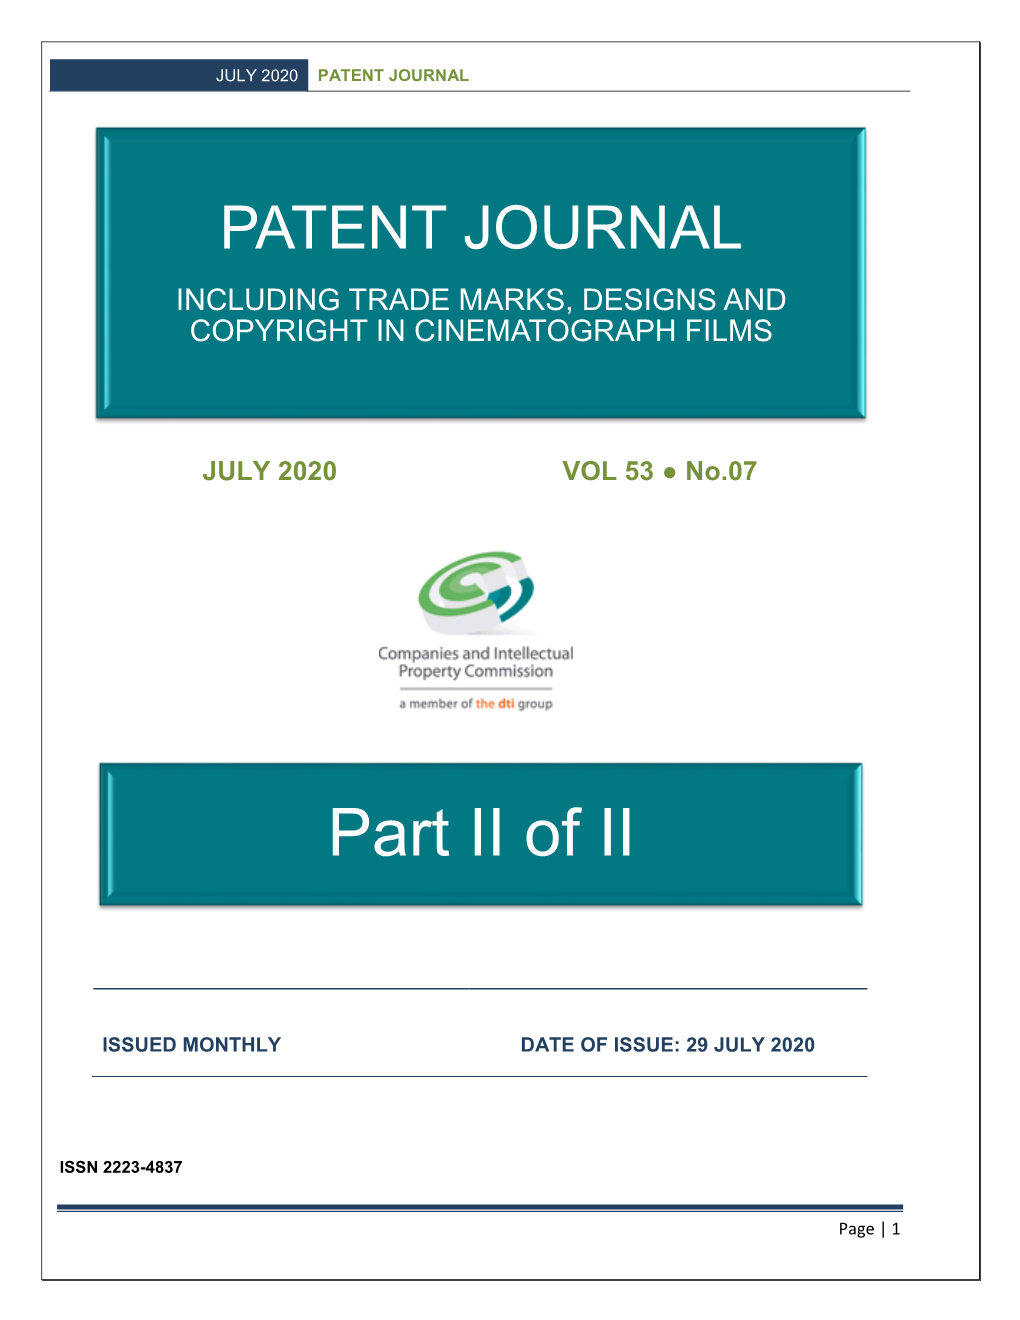 Patent Journal